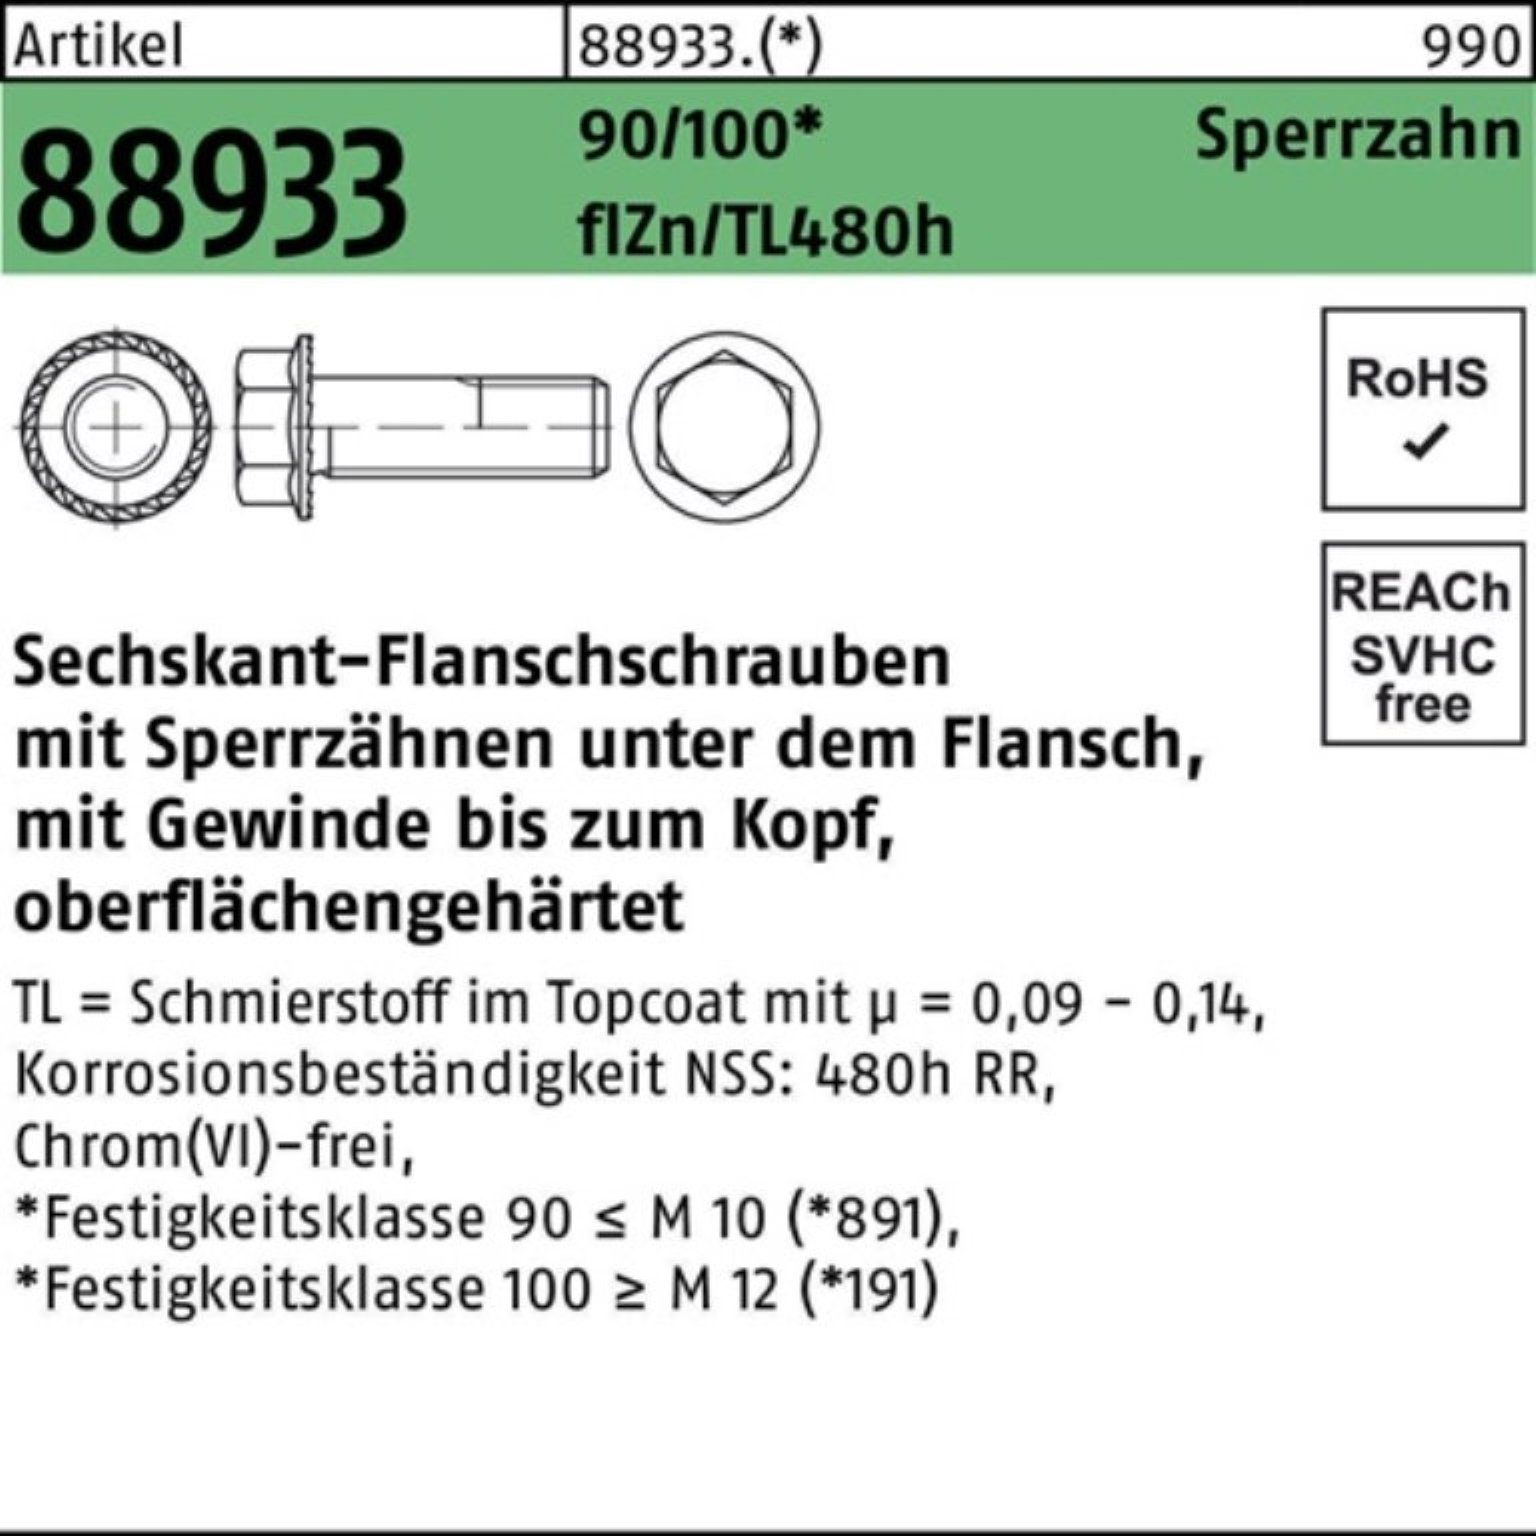 Sechskantflanschschraube R Sperrz. 88933 Reyher 500er Schraube Pack VG M5x10 90/100 fl